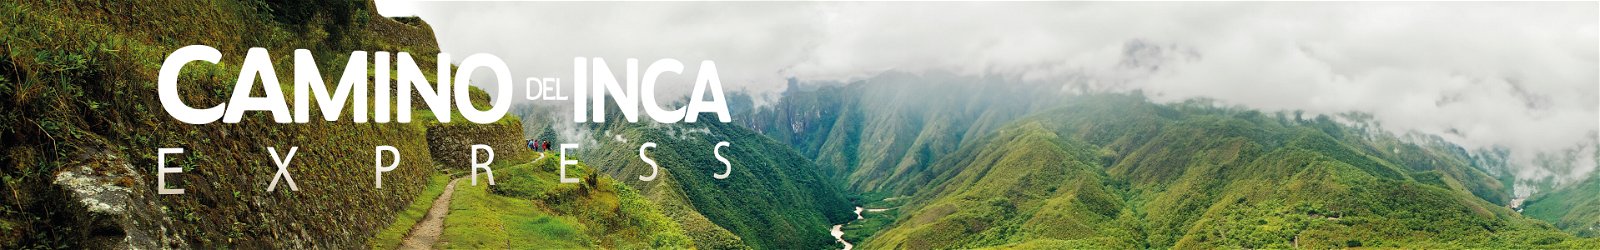 Viajes a Europa Camino del Inca Express